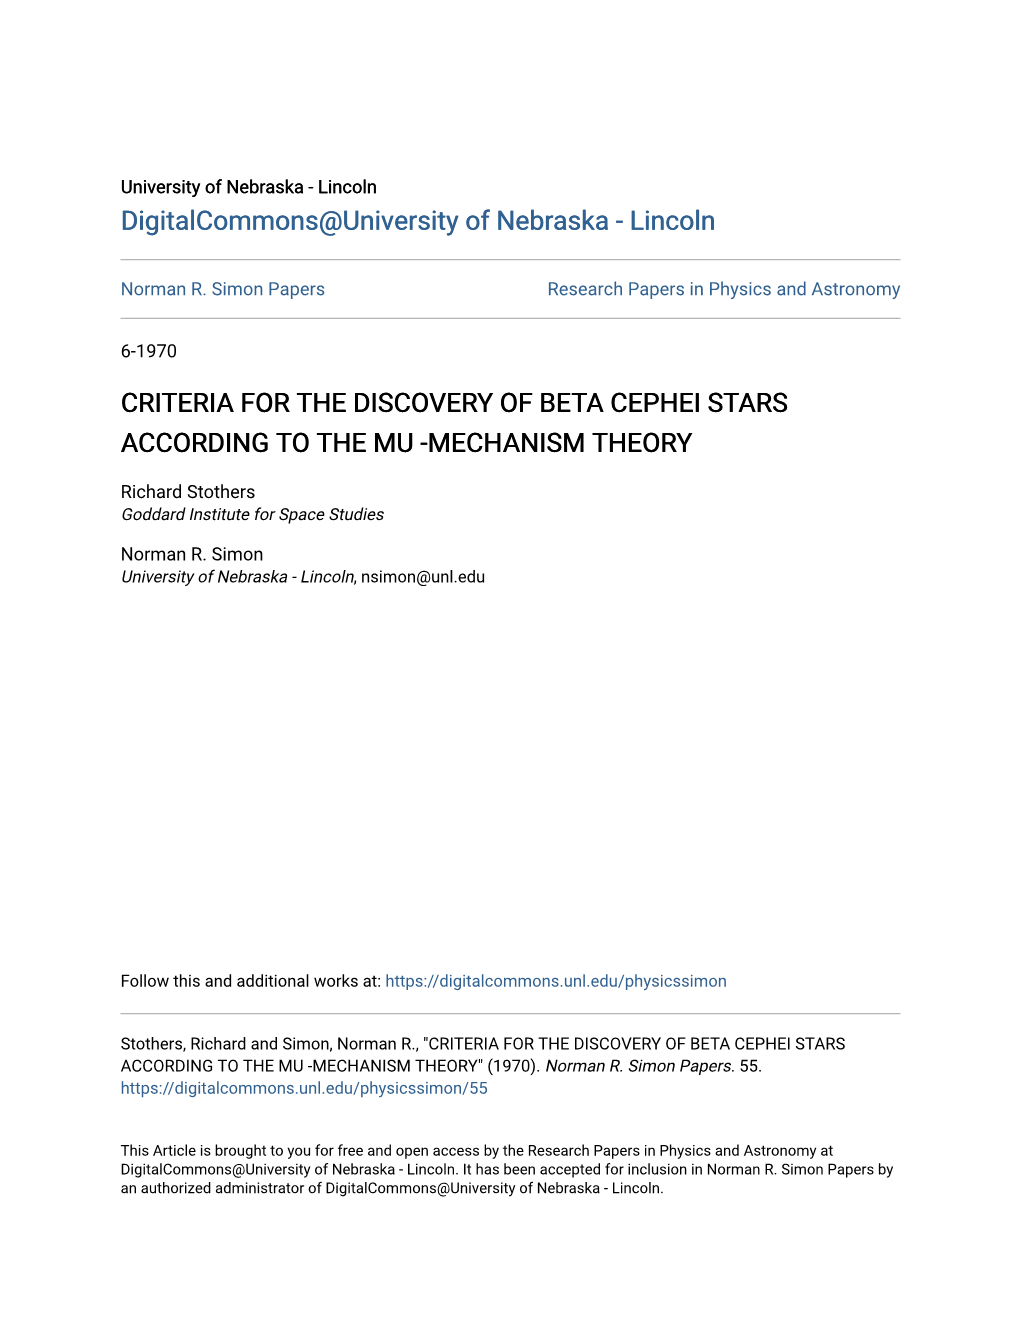 Criteria for the Discovery of Beta Cephei Stars According to the Mu -Mechanism Theory